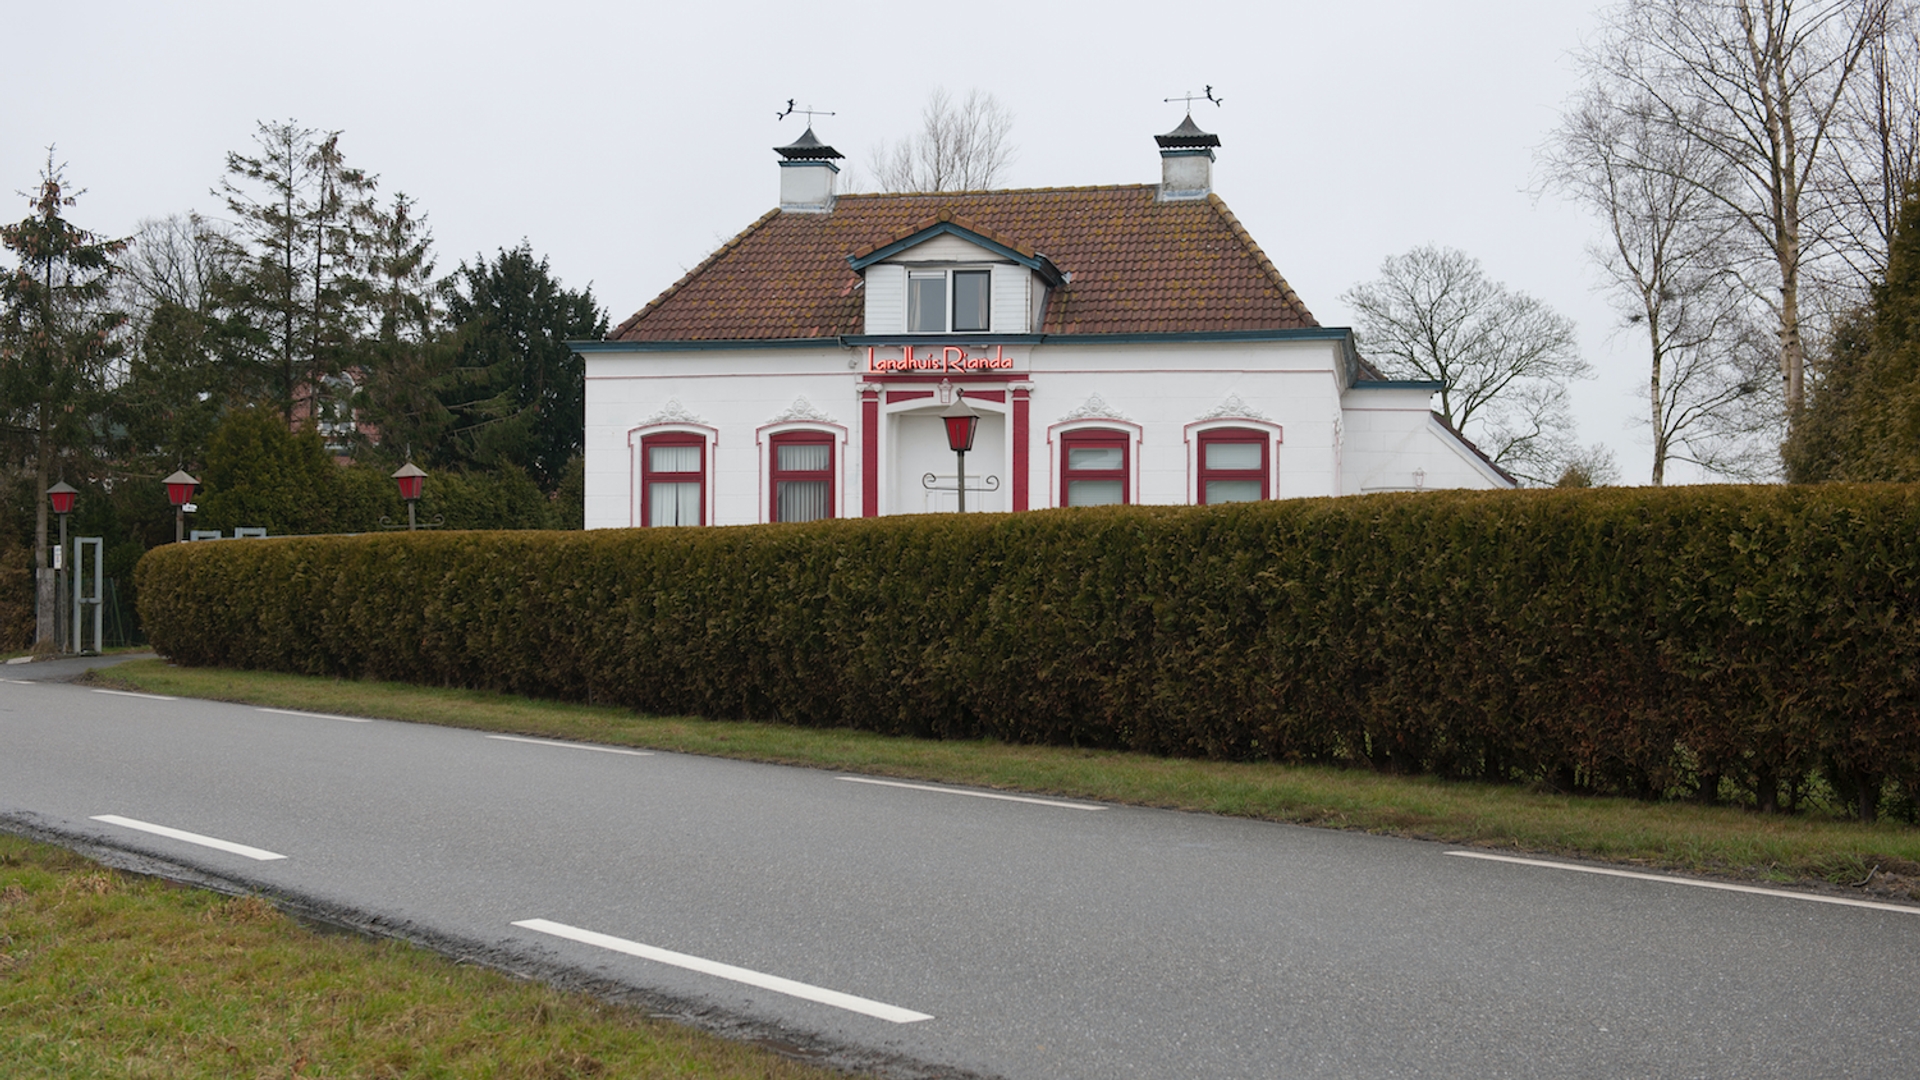 Club Rianda in Nieuw Beerta